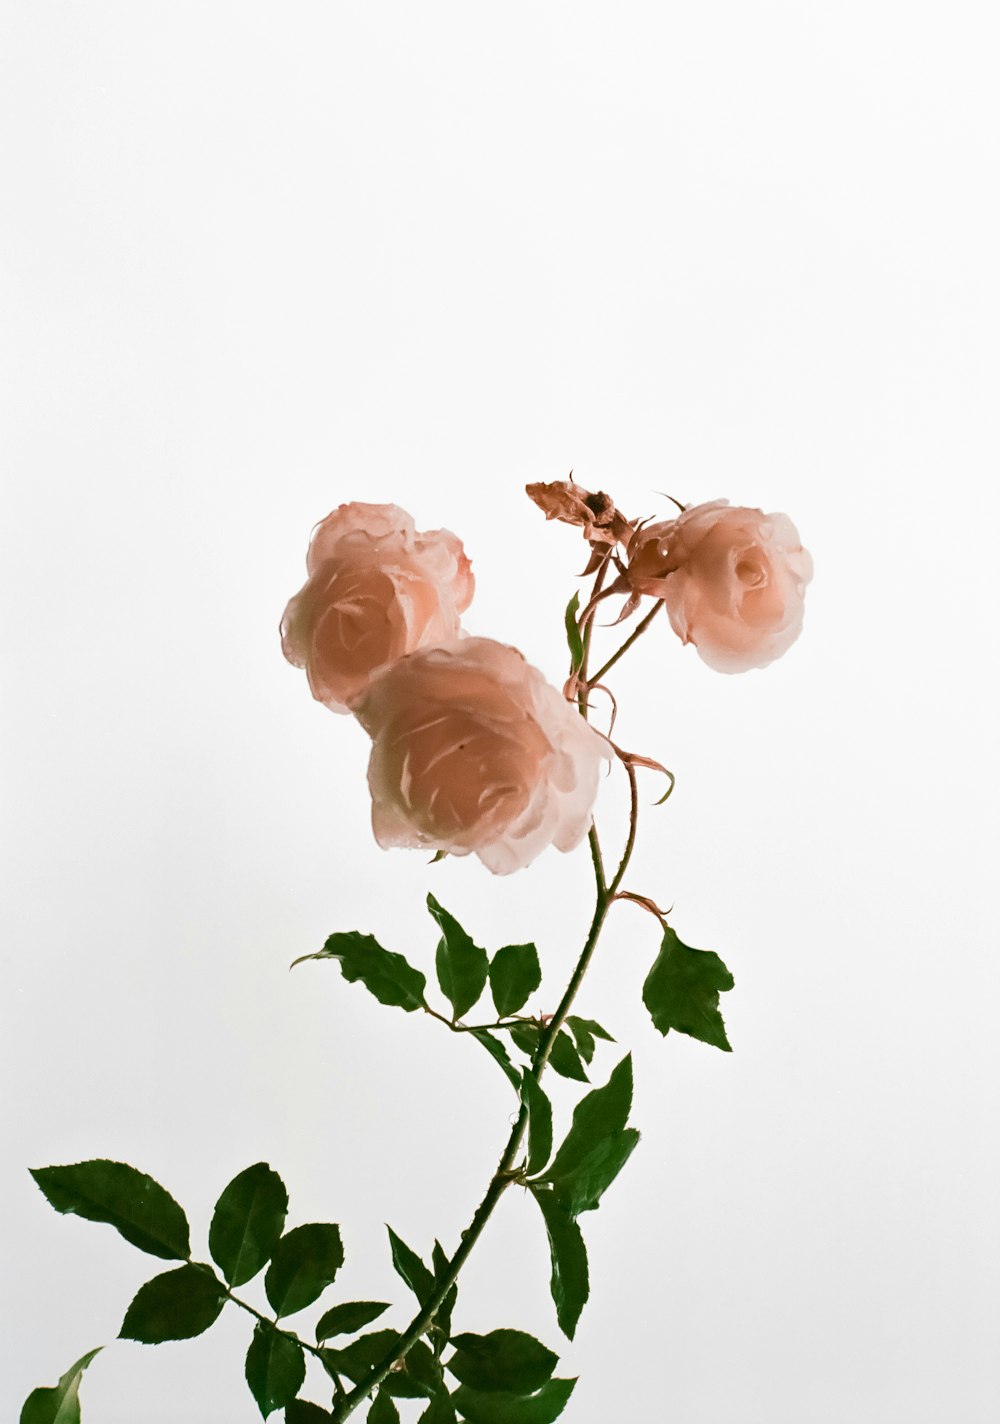 fleur de rose rose